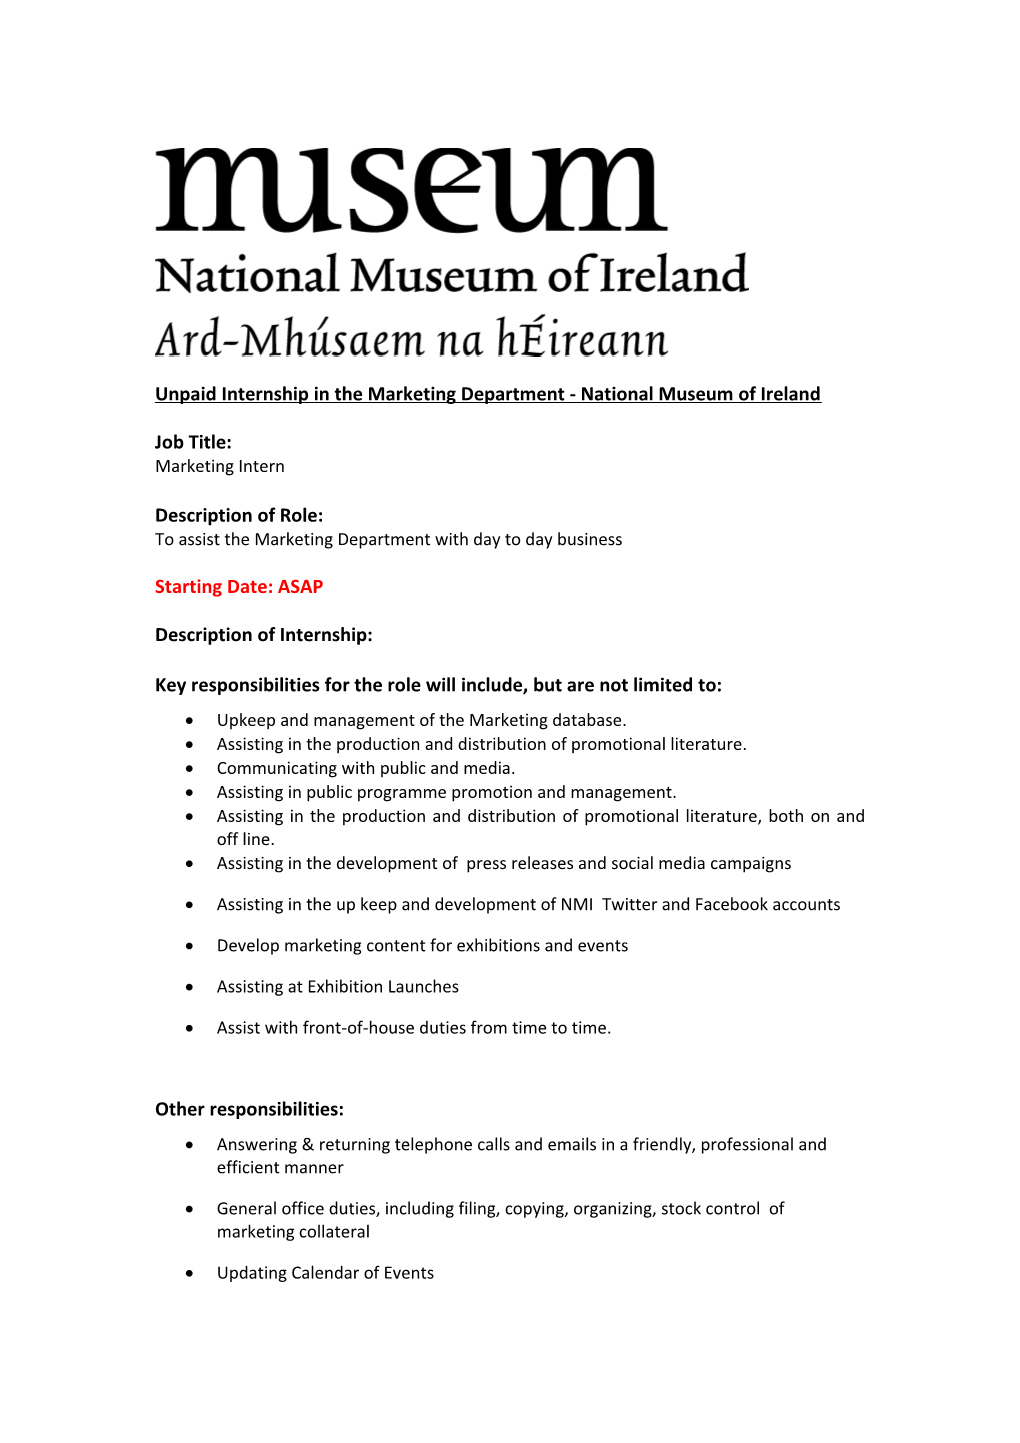 Internship in the Marketing Department, National Museum of Ireland